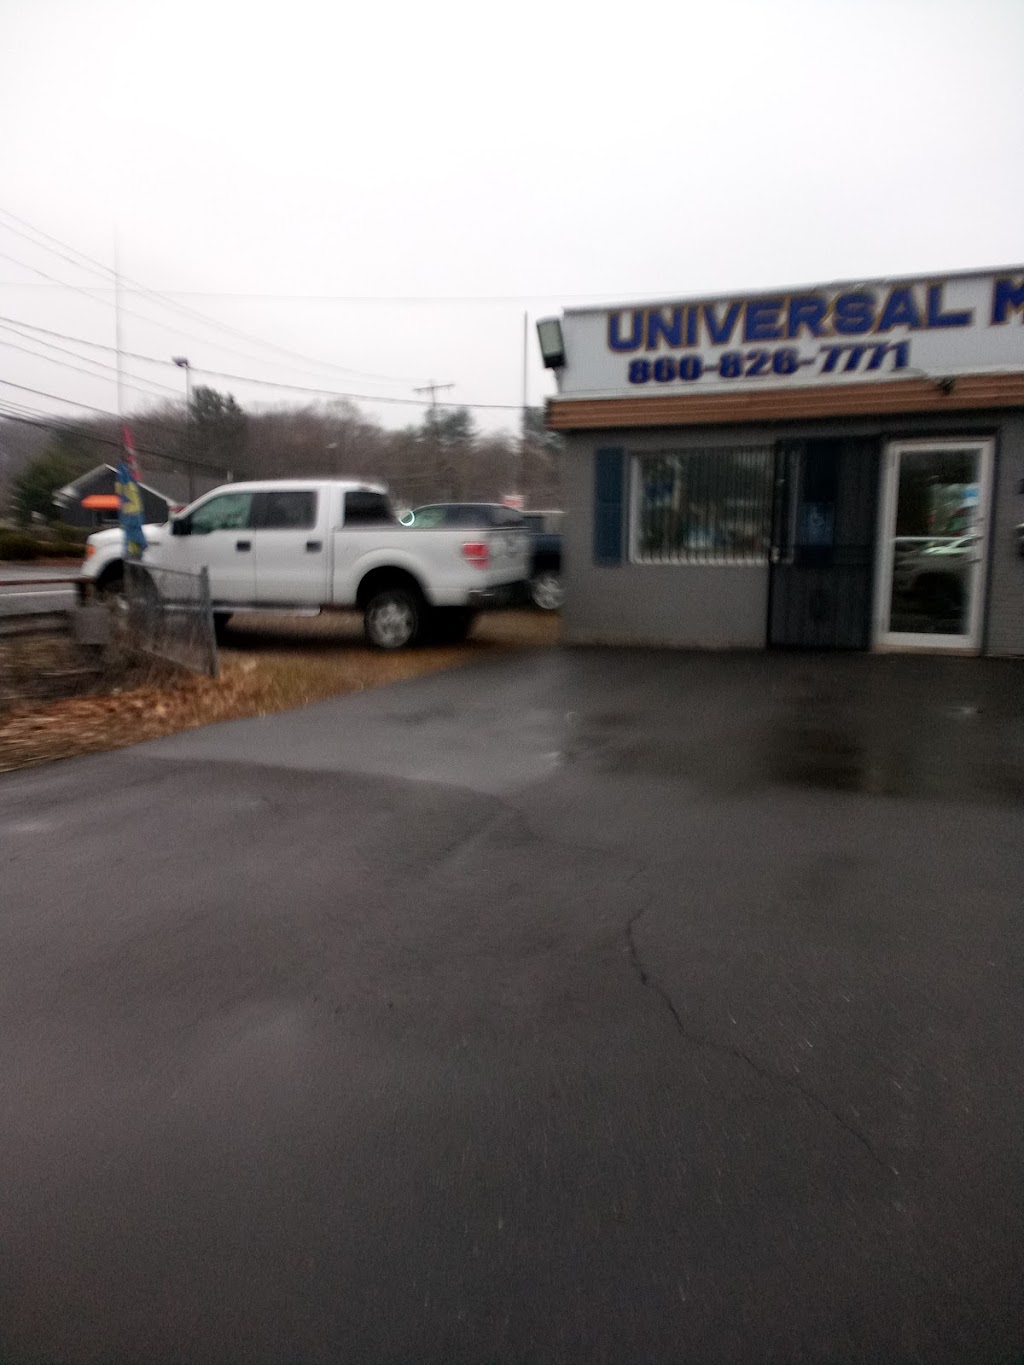 Universal Motors LLC | 1036 W Main St, New Britain, CT 06053 | Phone: (860) 826-7771